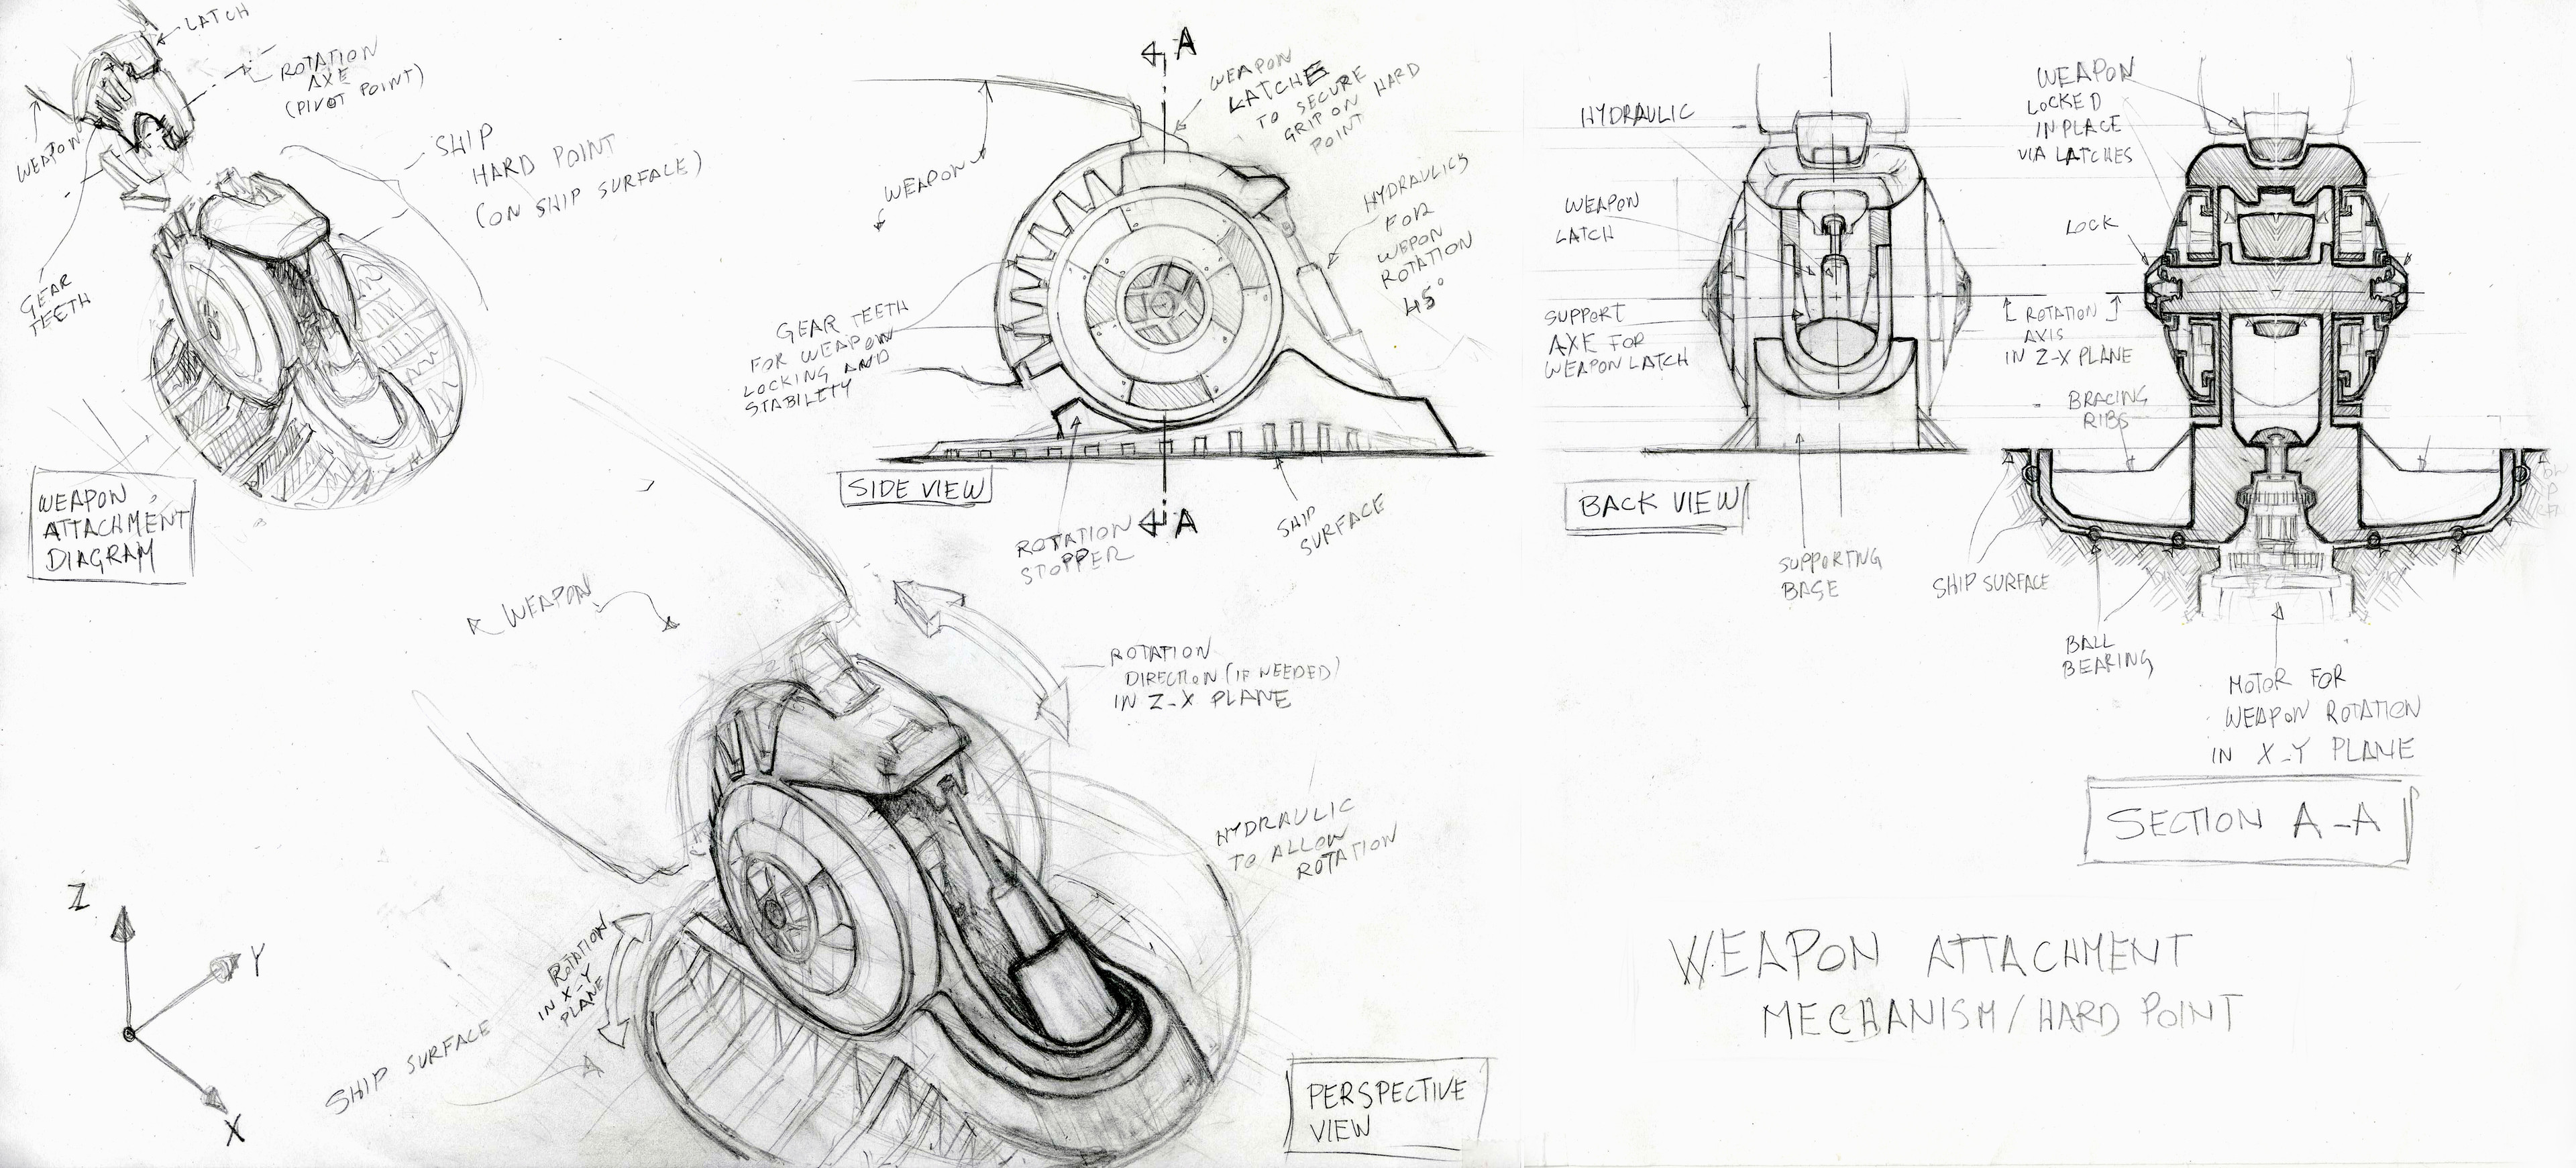 Weapon Attachment system Concept.